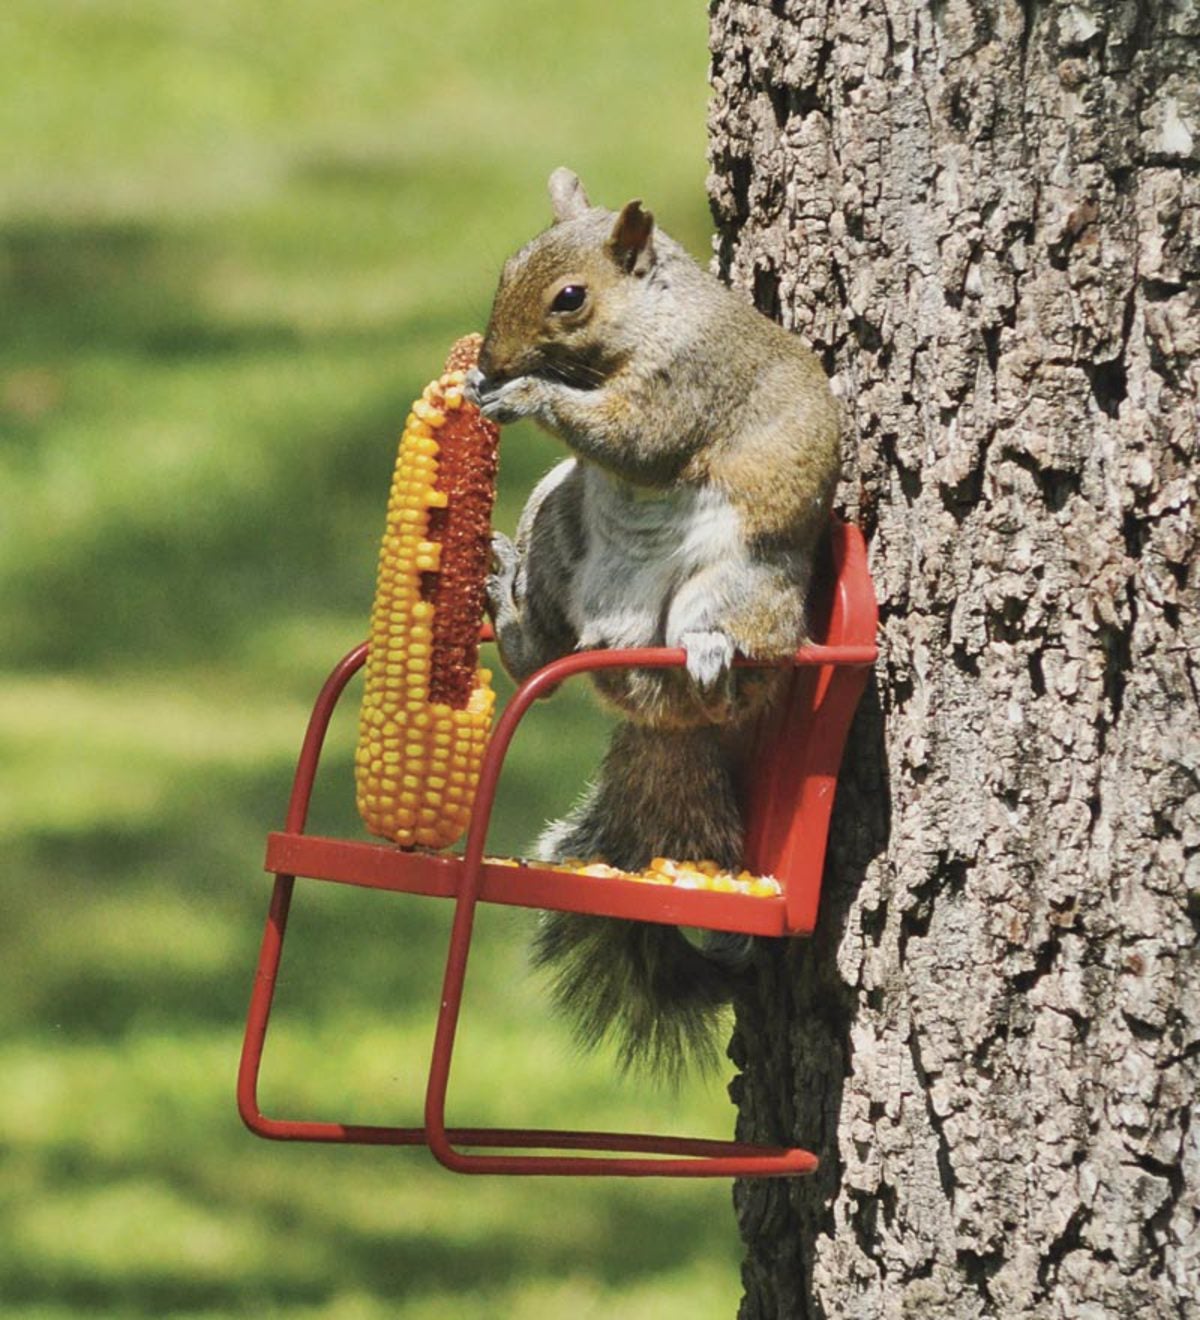 Red Retro Lawn Chair Squirrel Feeder